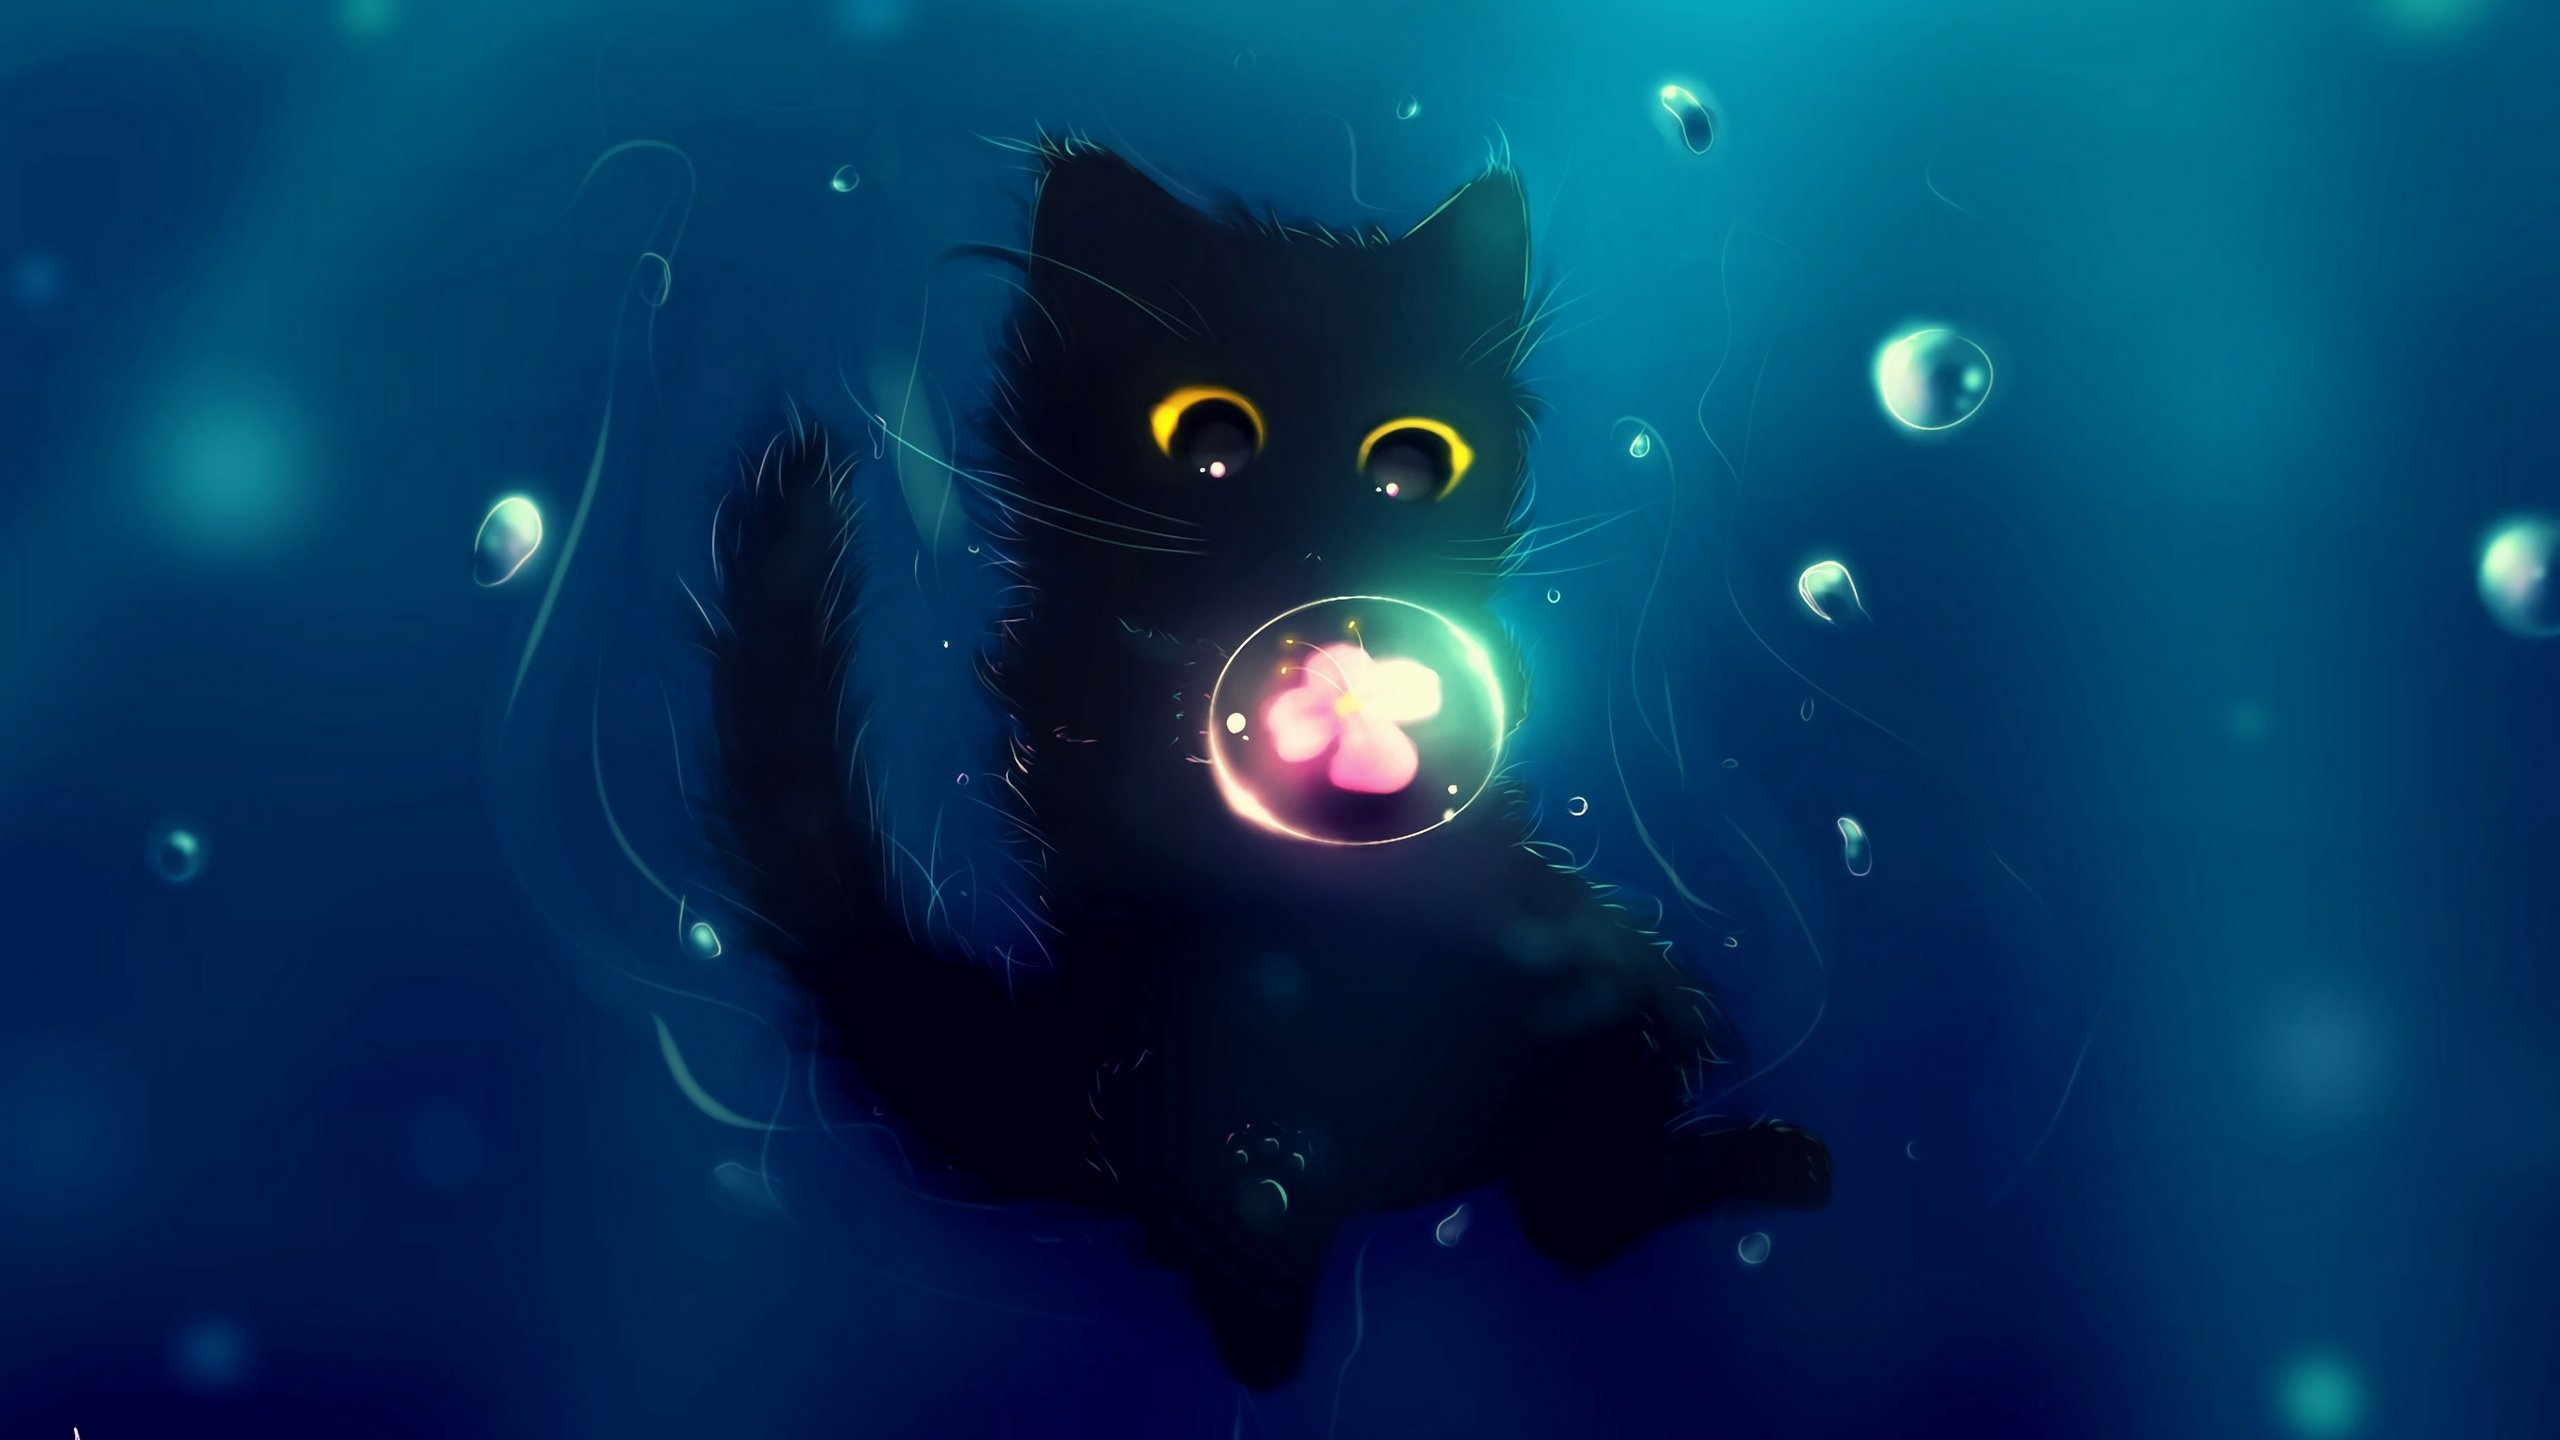 pisici, cat, pink, blue, sky neko, underwater, bubble, luminos, water drop, black, fantasy, flower, eyes